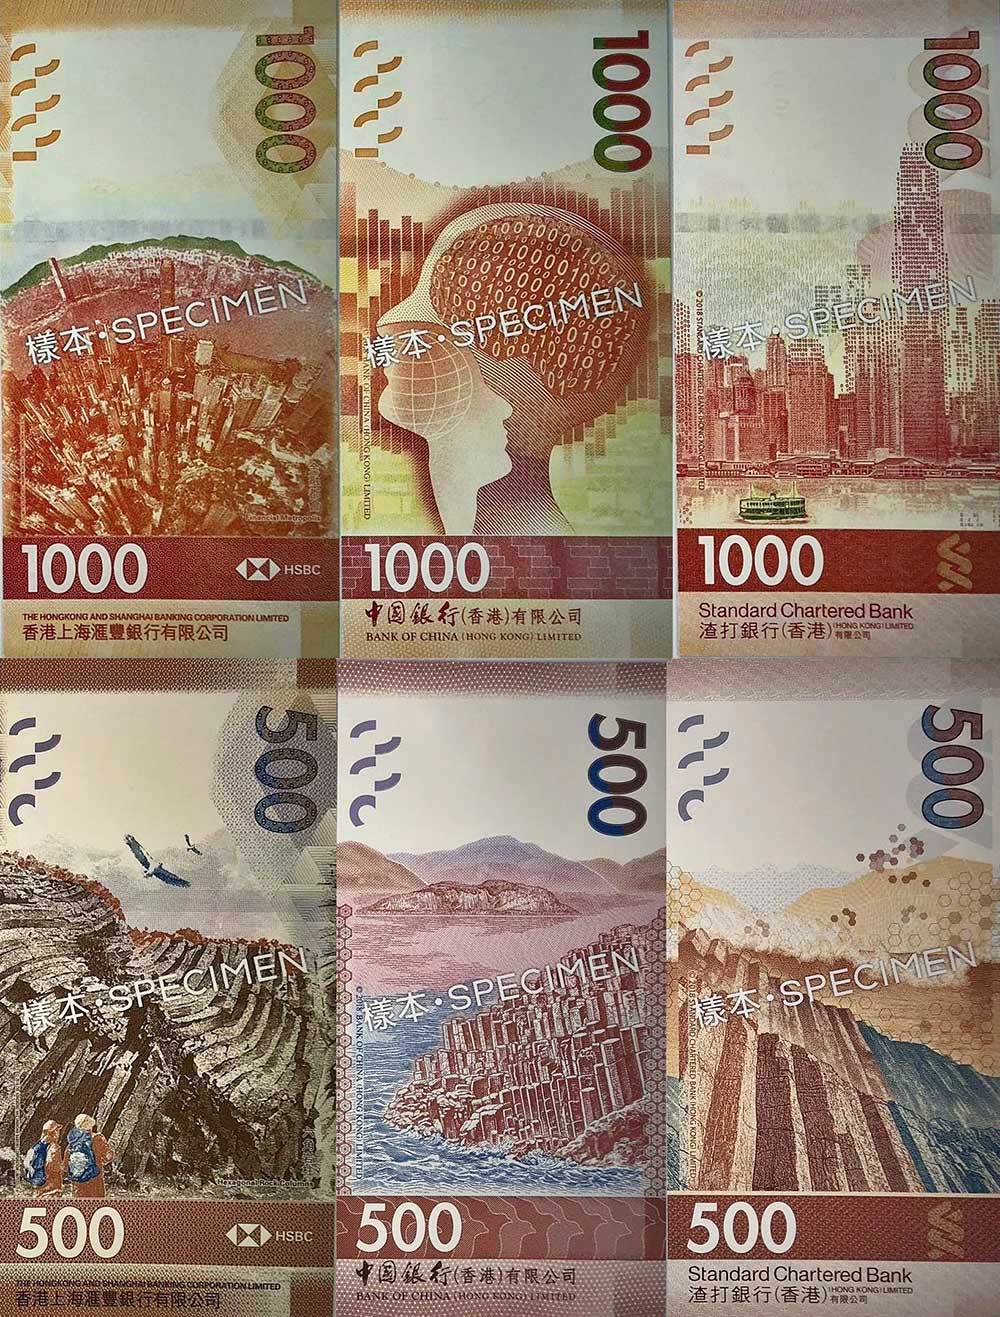 New Hong Kong Banknote Designs Unveiled | bc magazine